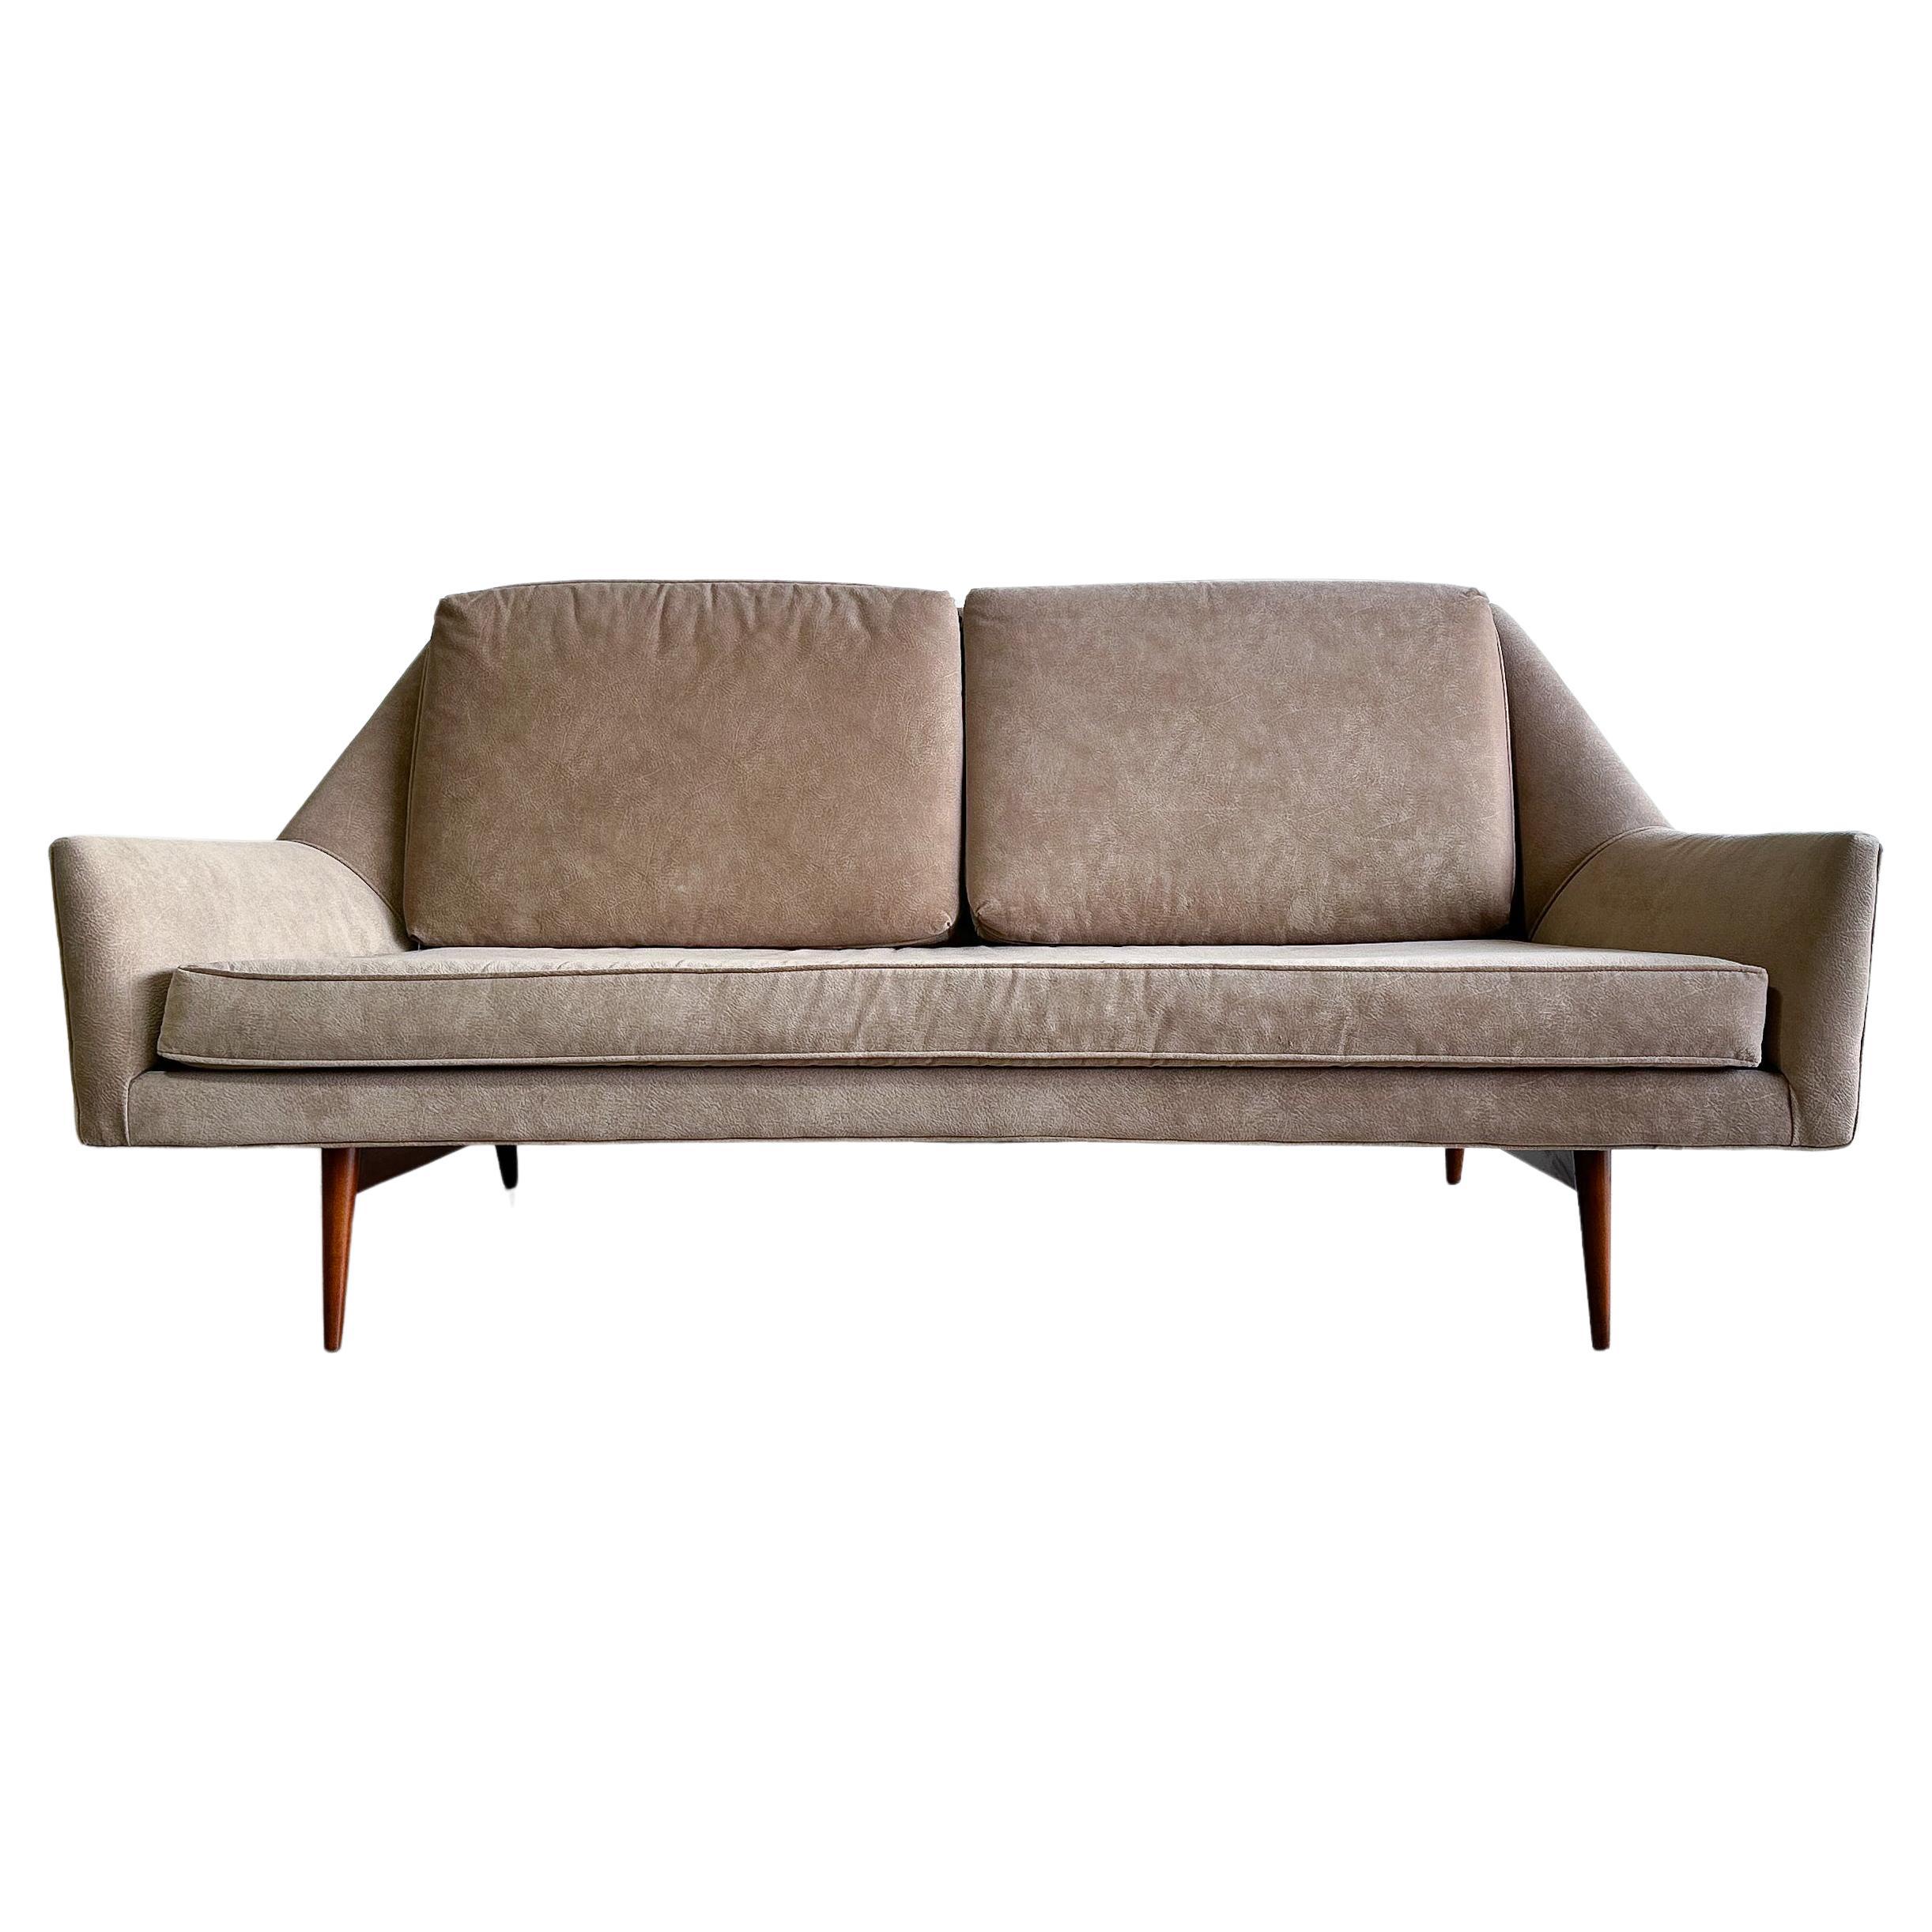 Seltenes Paul McCobb Angle Arm Sofa für Directional, 1950er Jahre